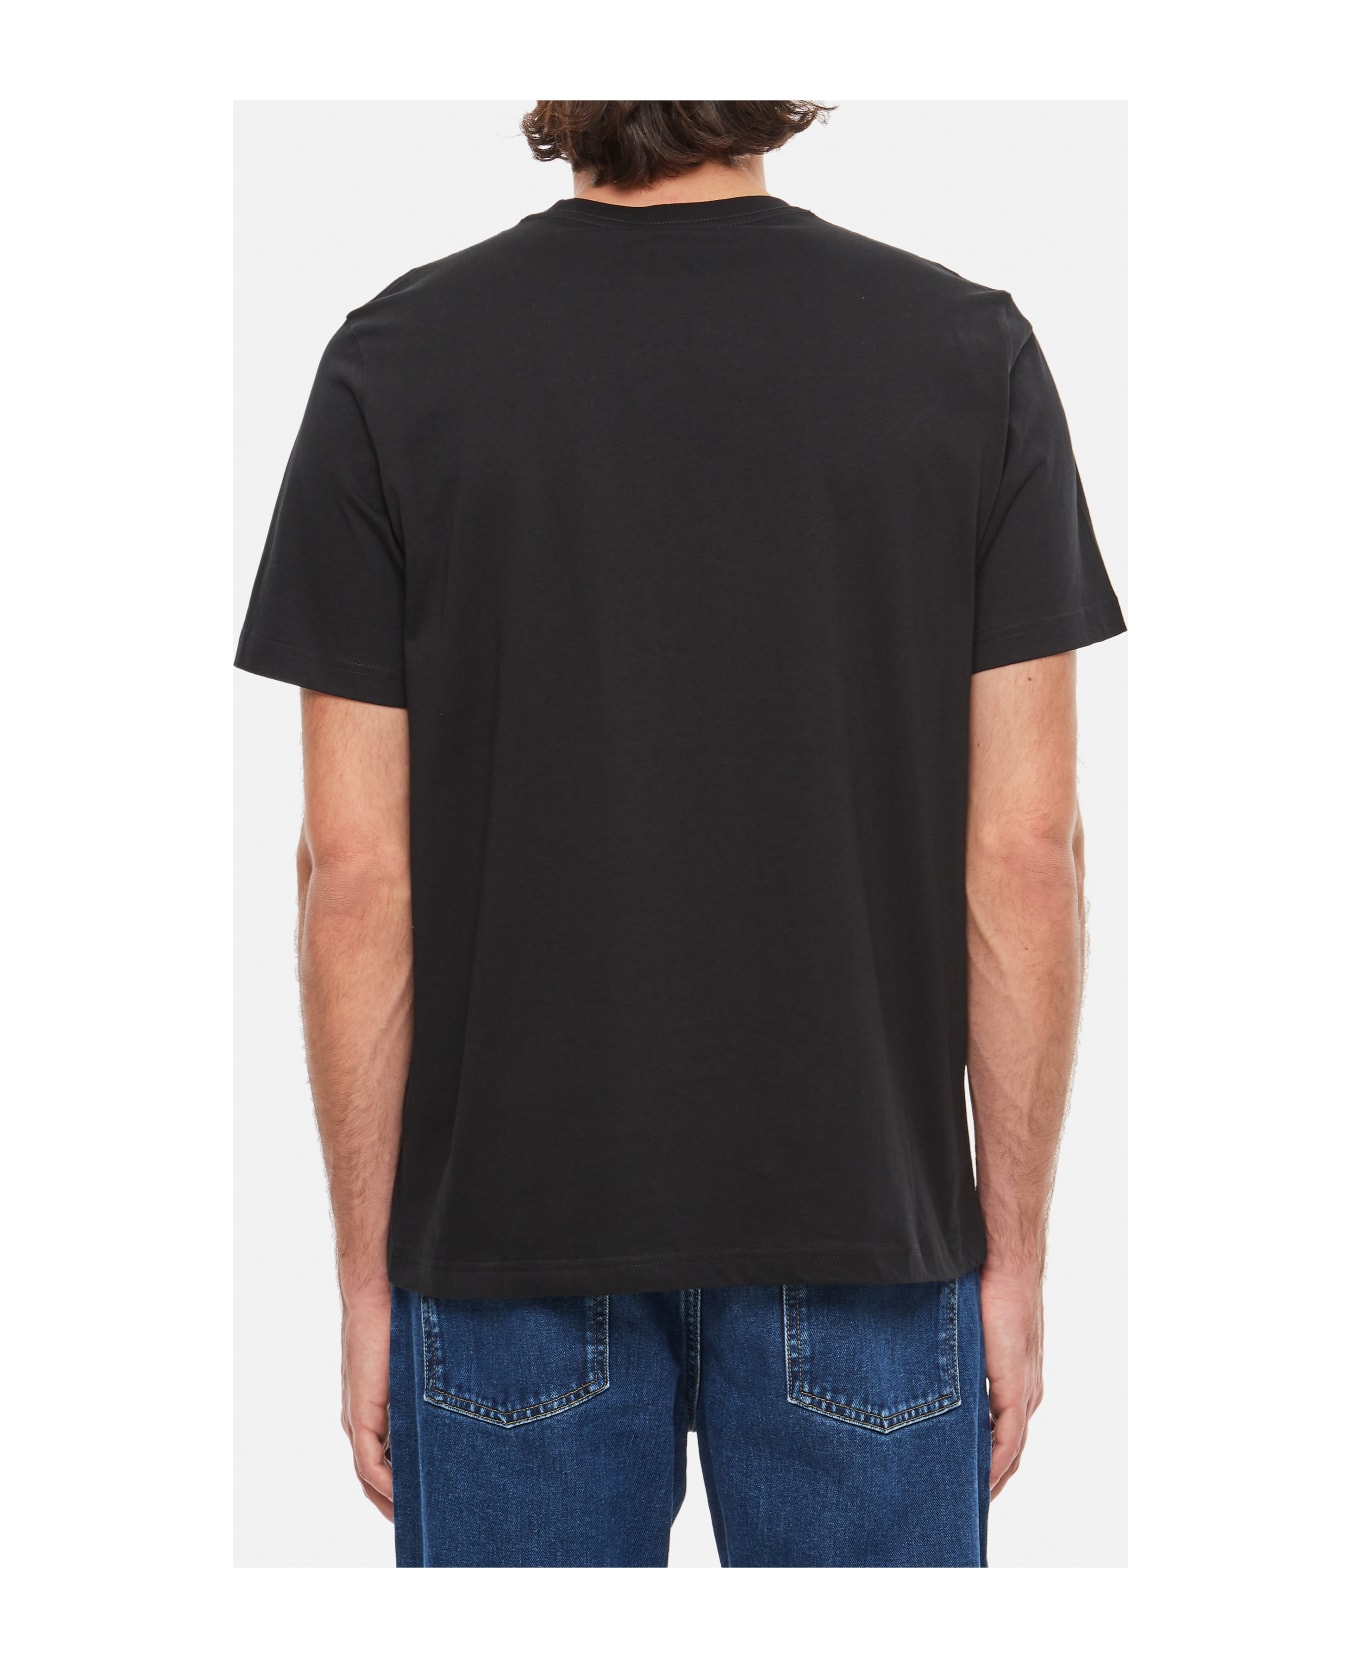 Paul Smith Zebra T-shirt - Black